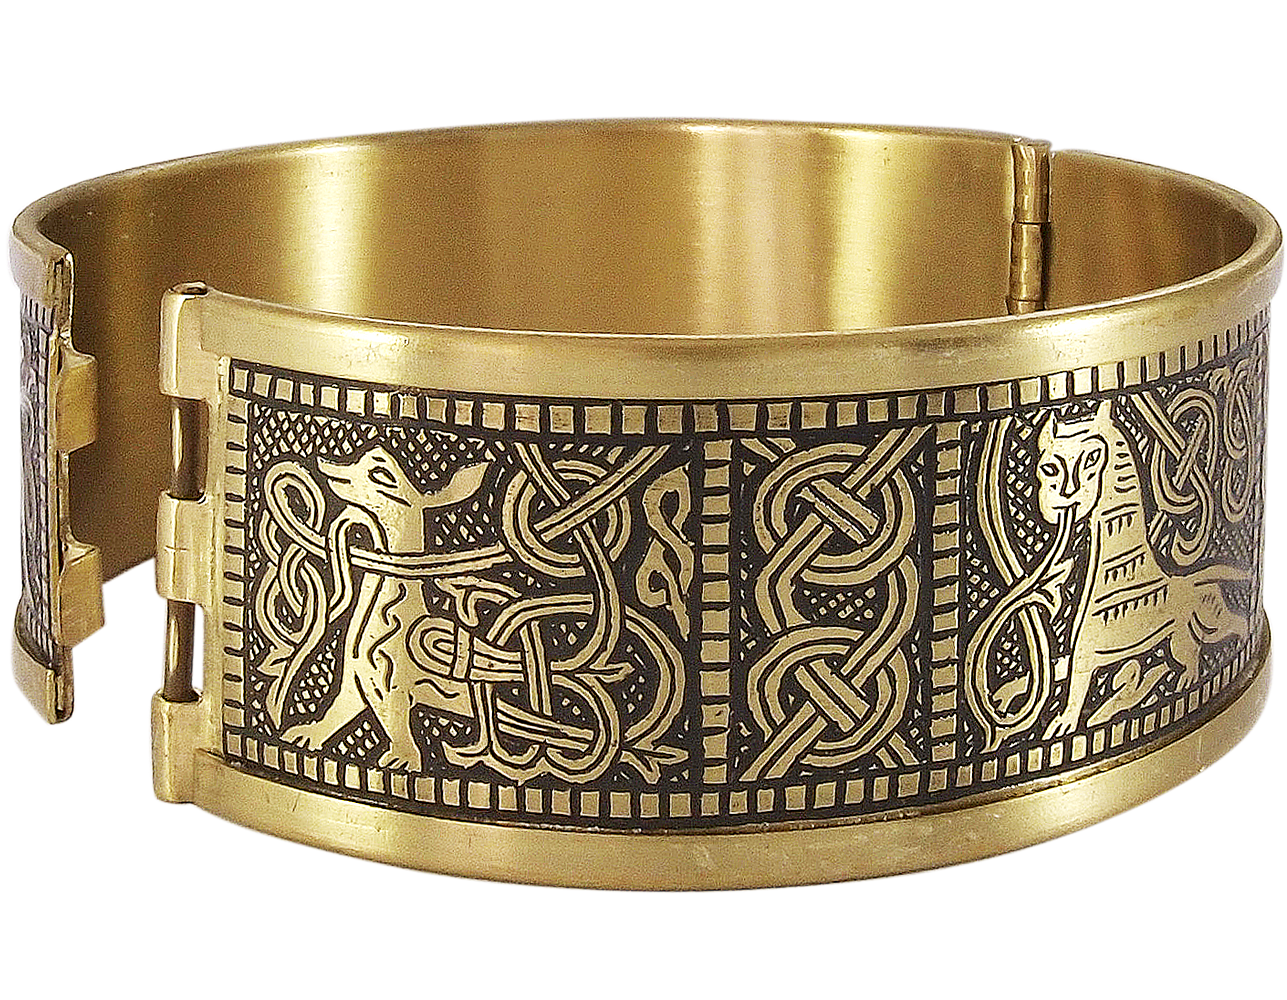 Small Kiev bracelet